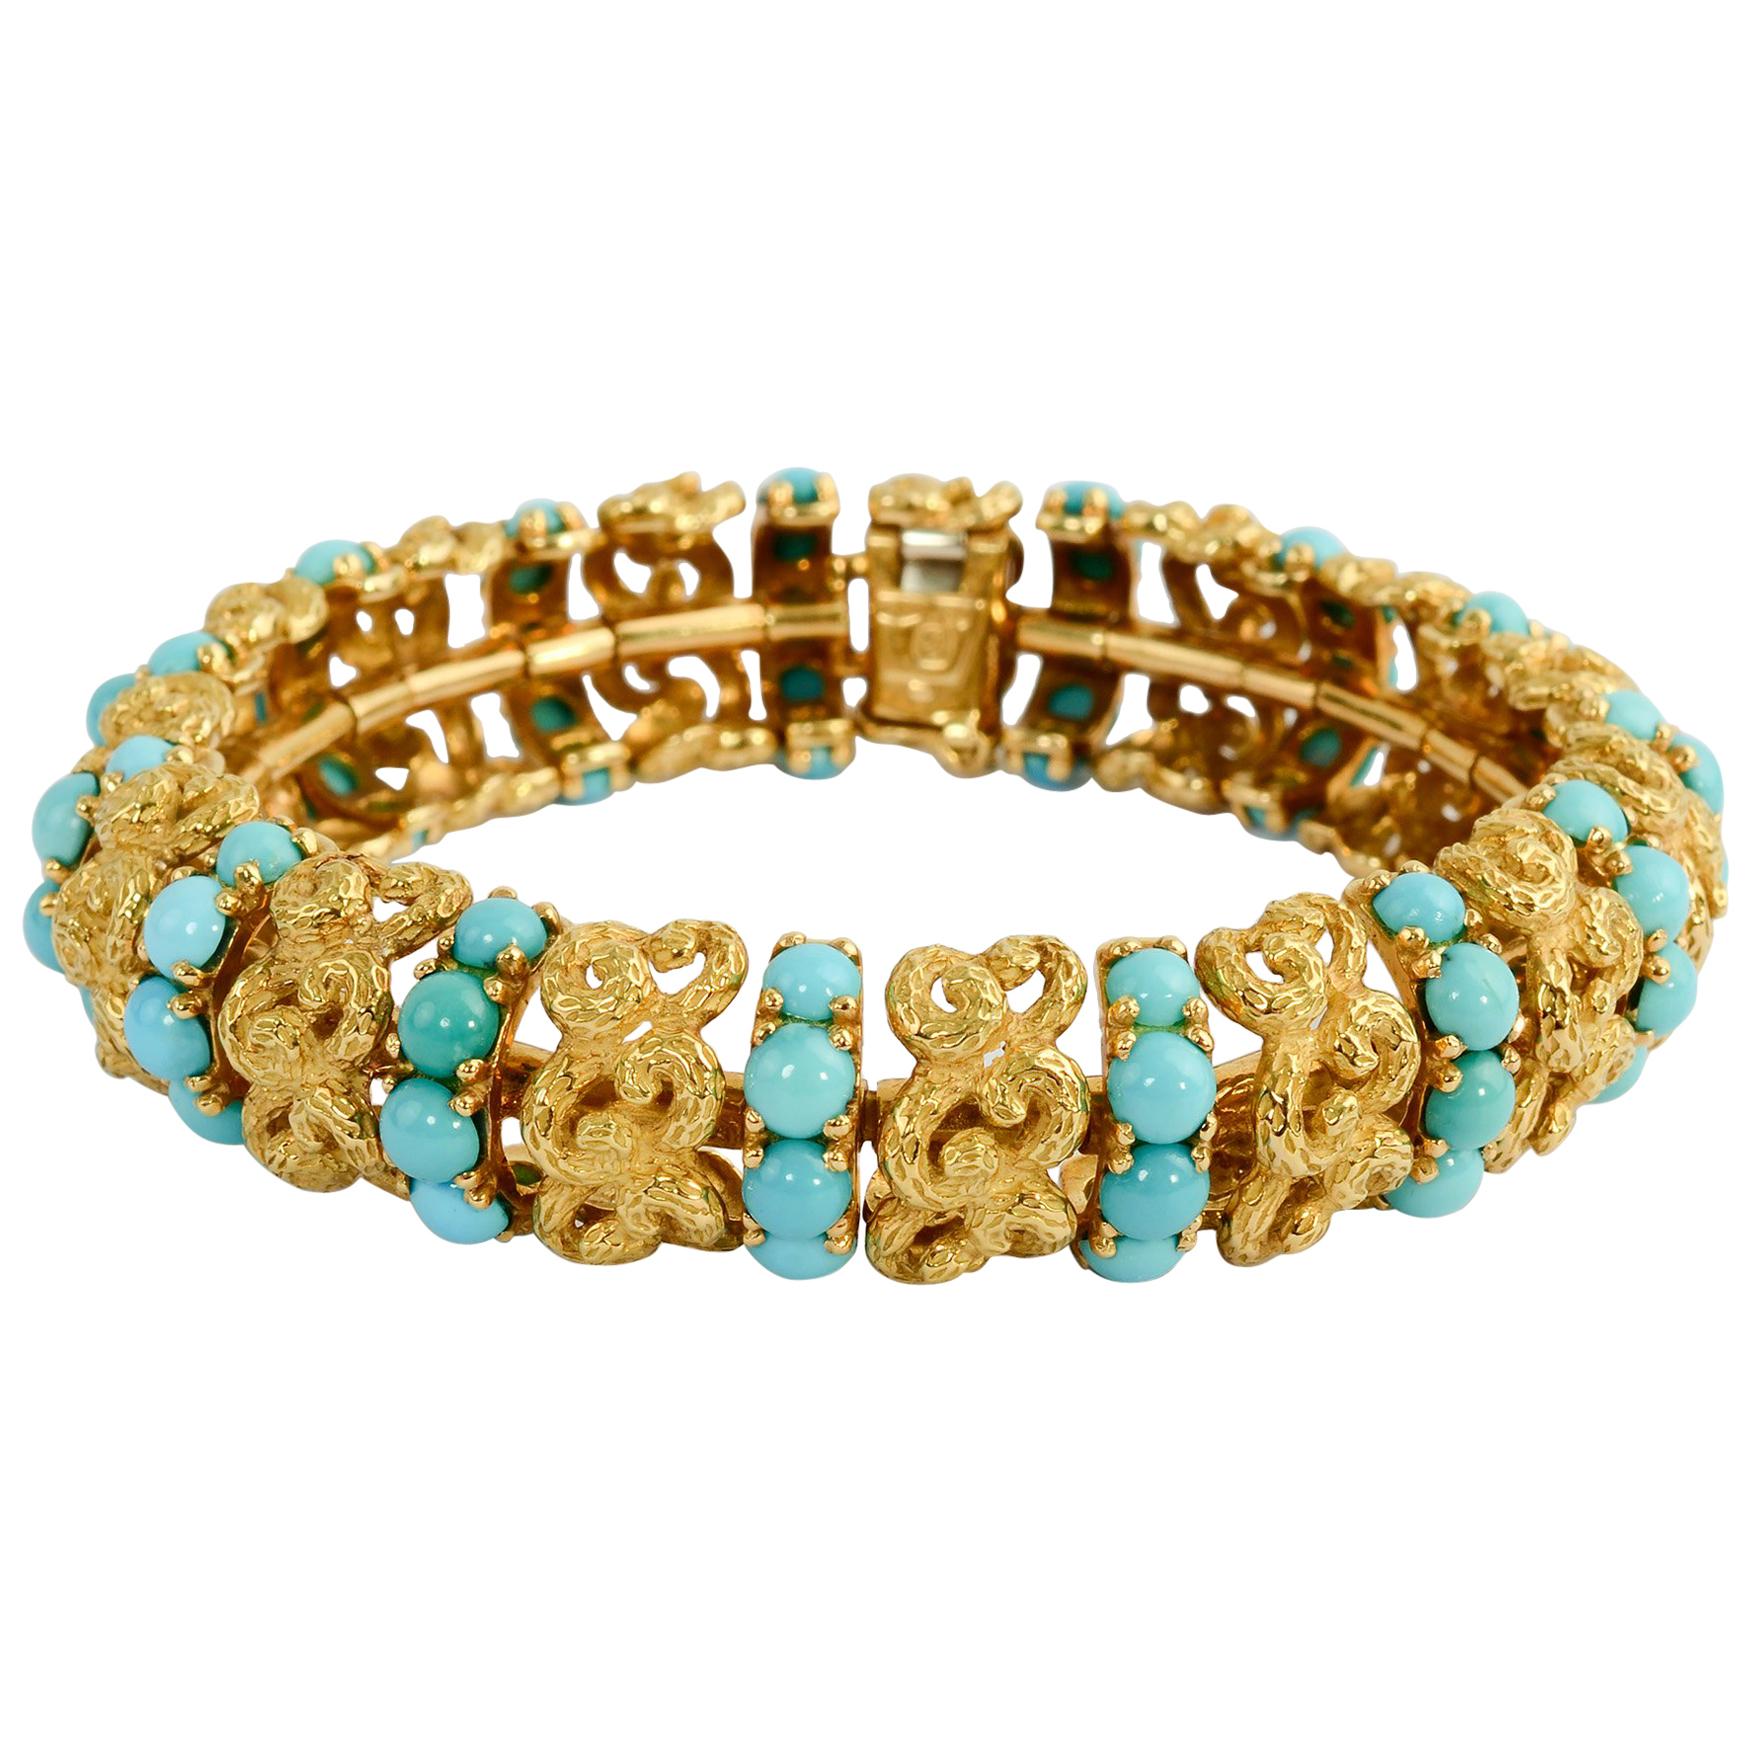 Pomellato Gold and Turquoise Bracelet